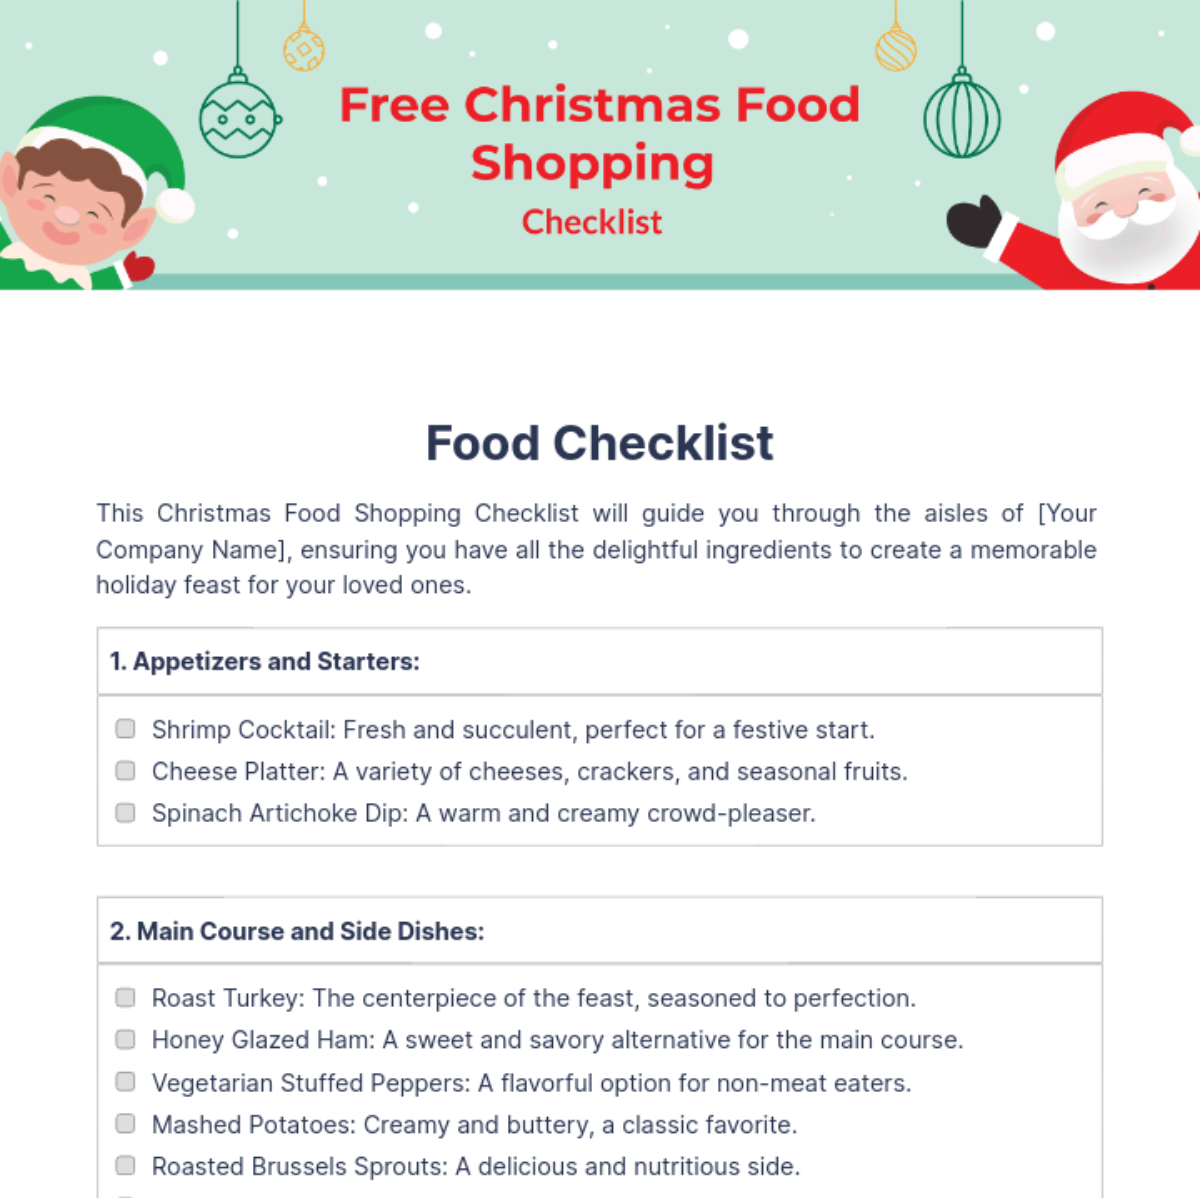 Free Christmas Food Shopping Checklist Template